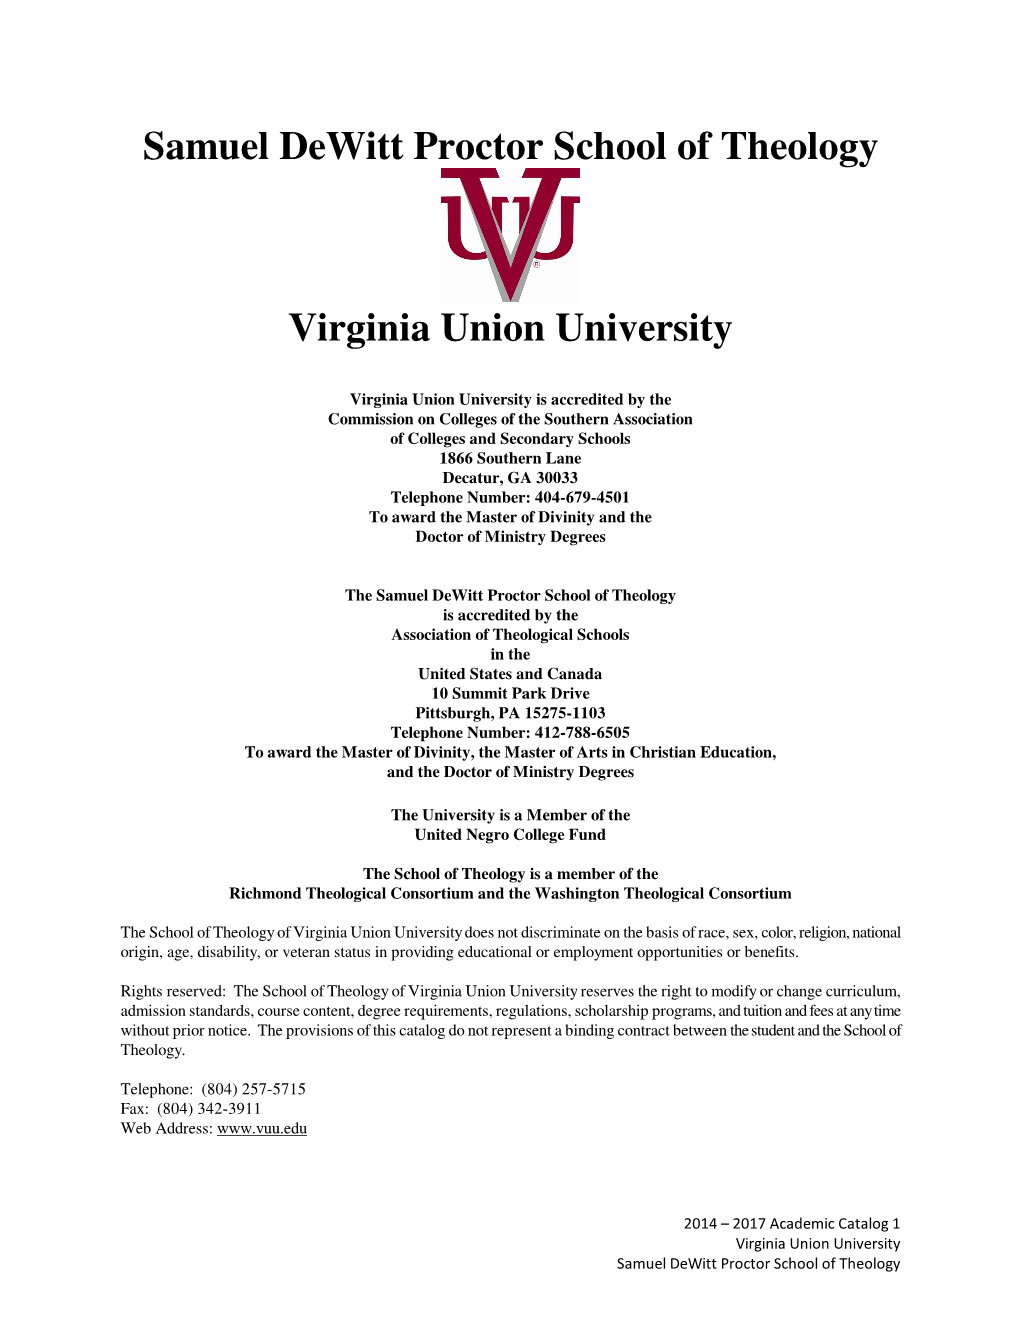 Samuel Dewitt Proctor School of Theology Virginia Union University; M.A., Union Presbyterian Seminary; Ph.D., Virginia Commonwealth University